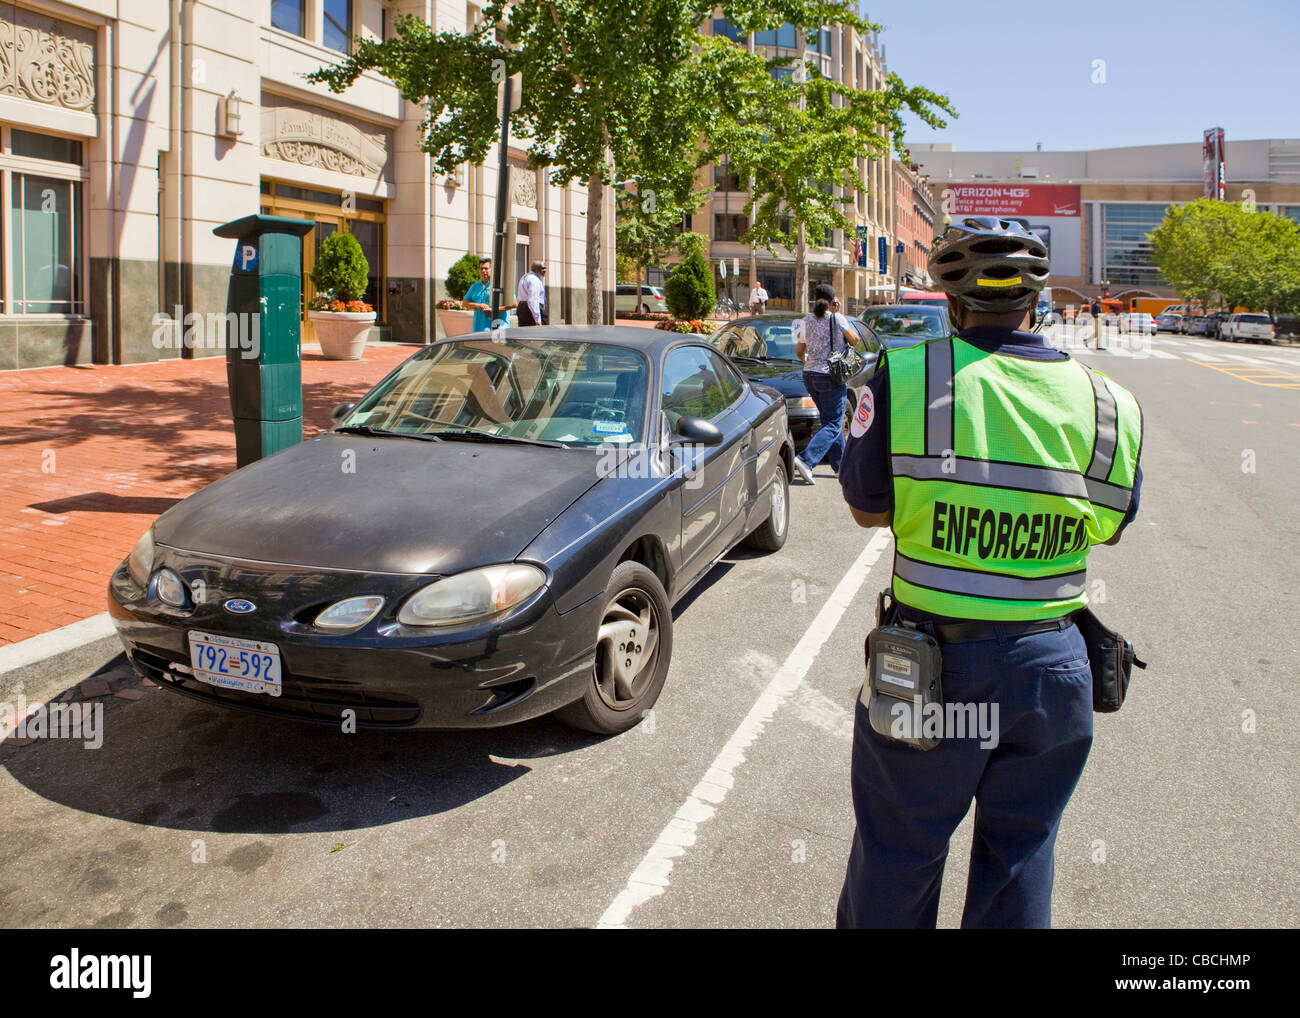 A parking enforcement writing a ticket - Washington, DC USA Stock Photo